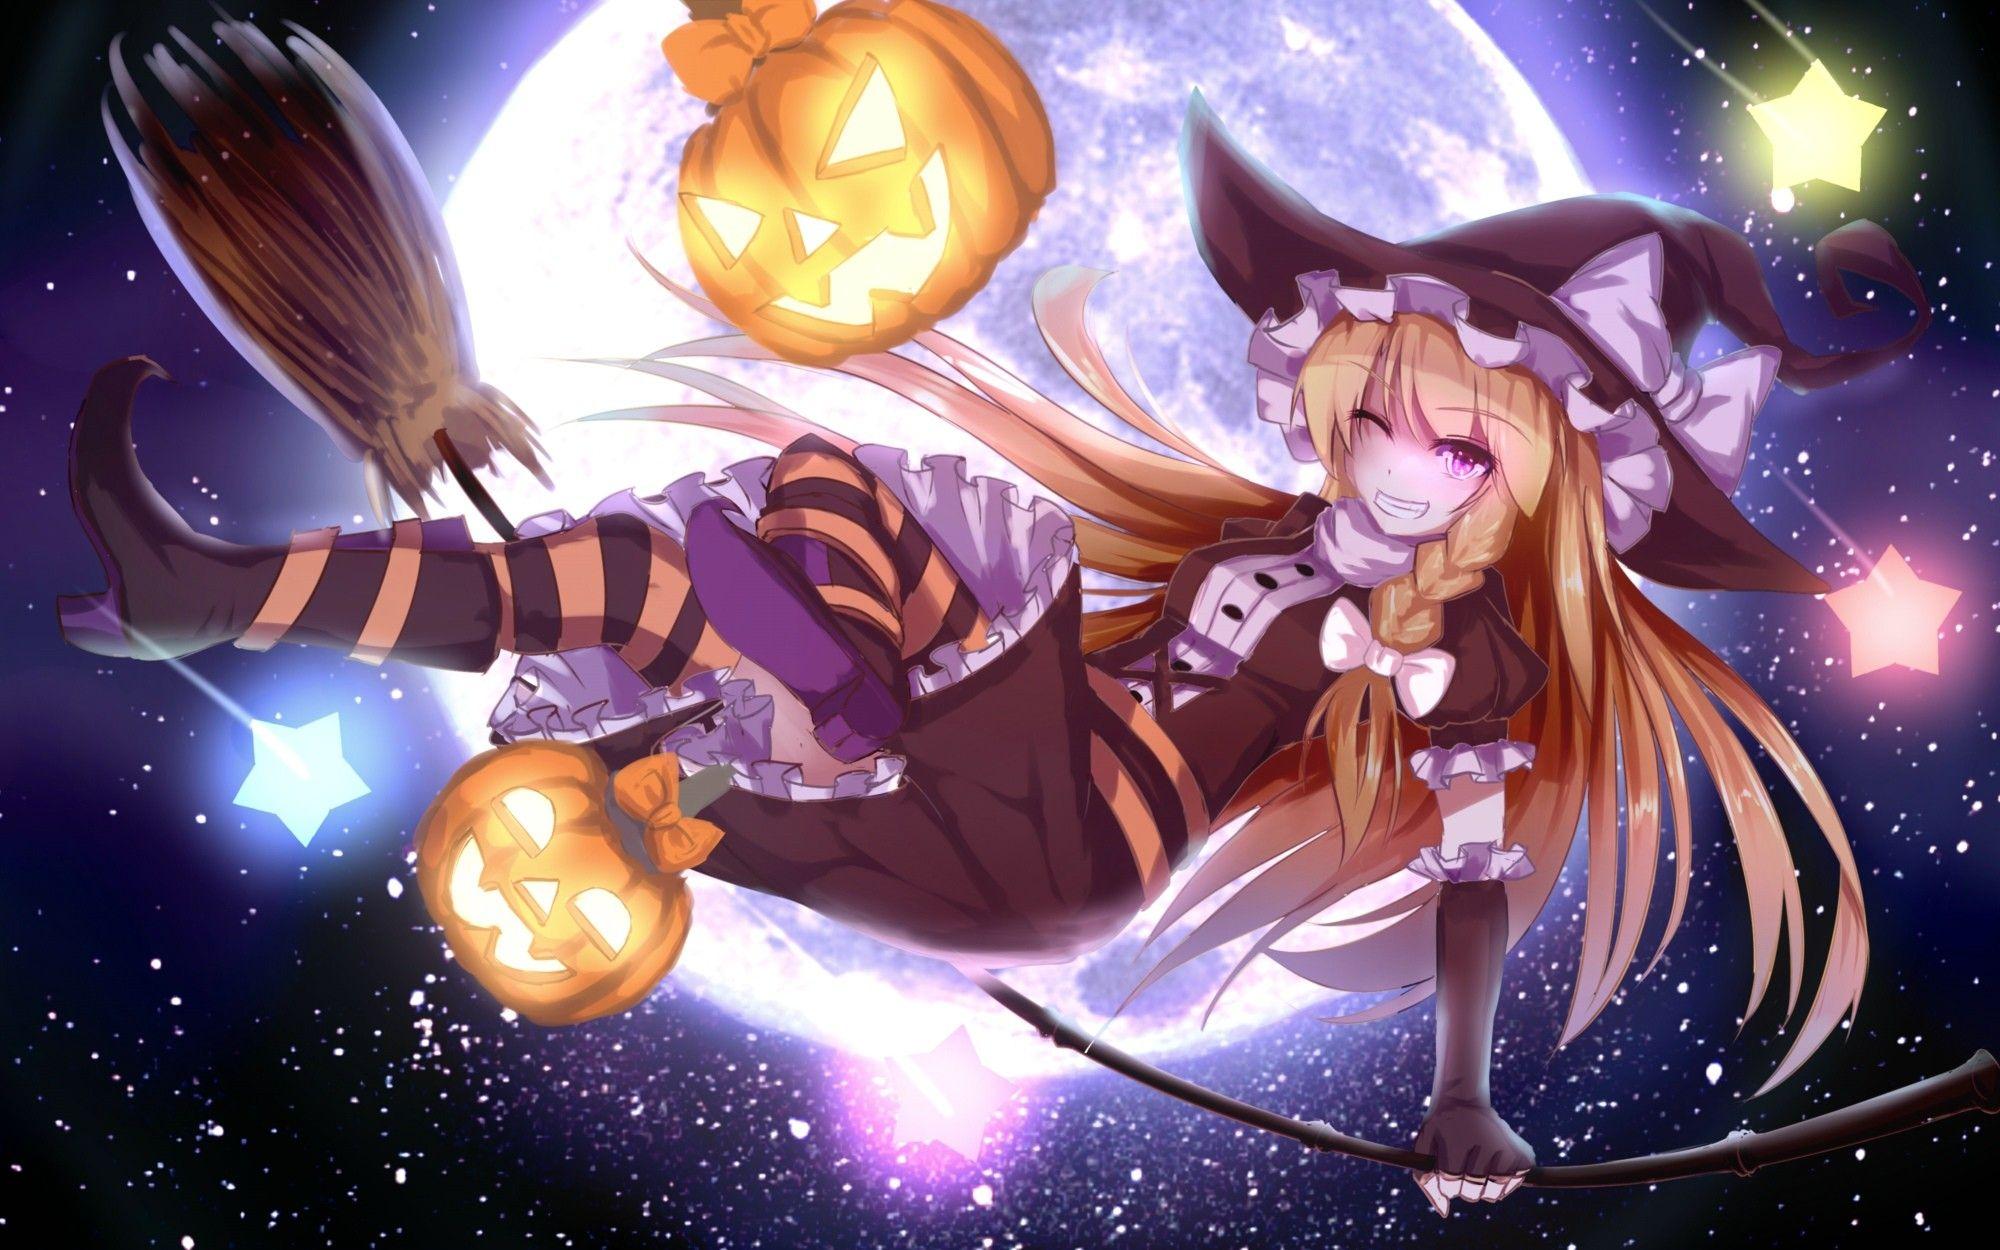 Anime Halloween Wallpaper 54 images